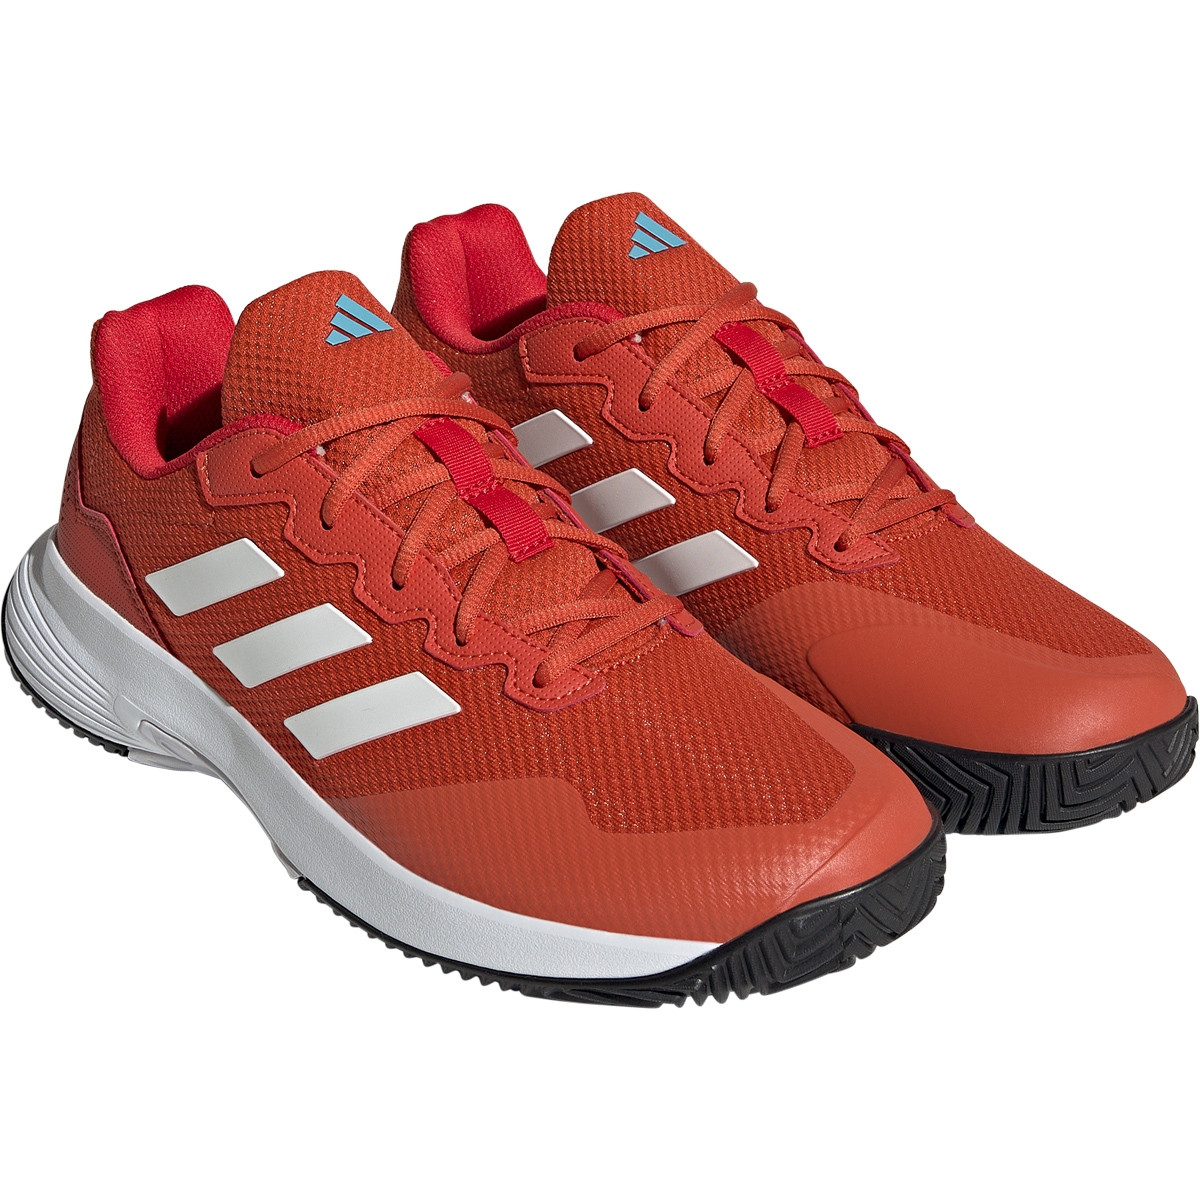 Chaussures de tennis homme GameCourt 2 adidas · adidas · Sports · El Corte  Inglés